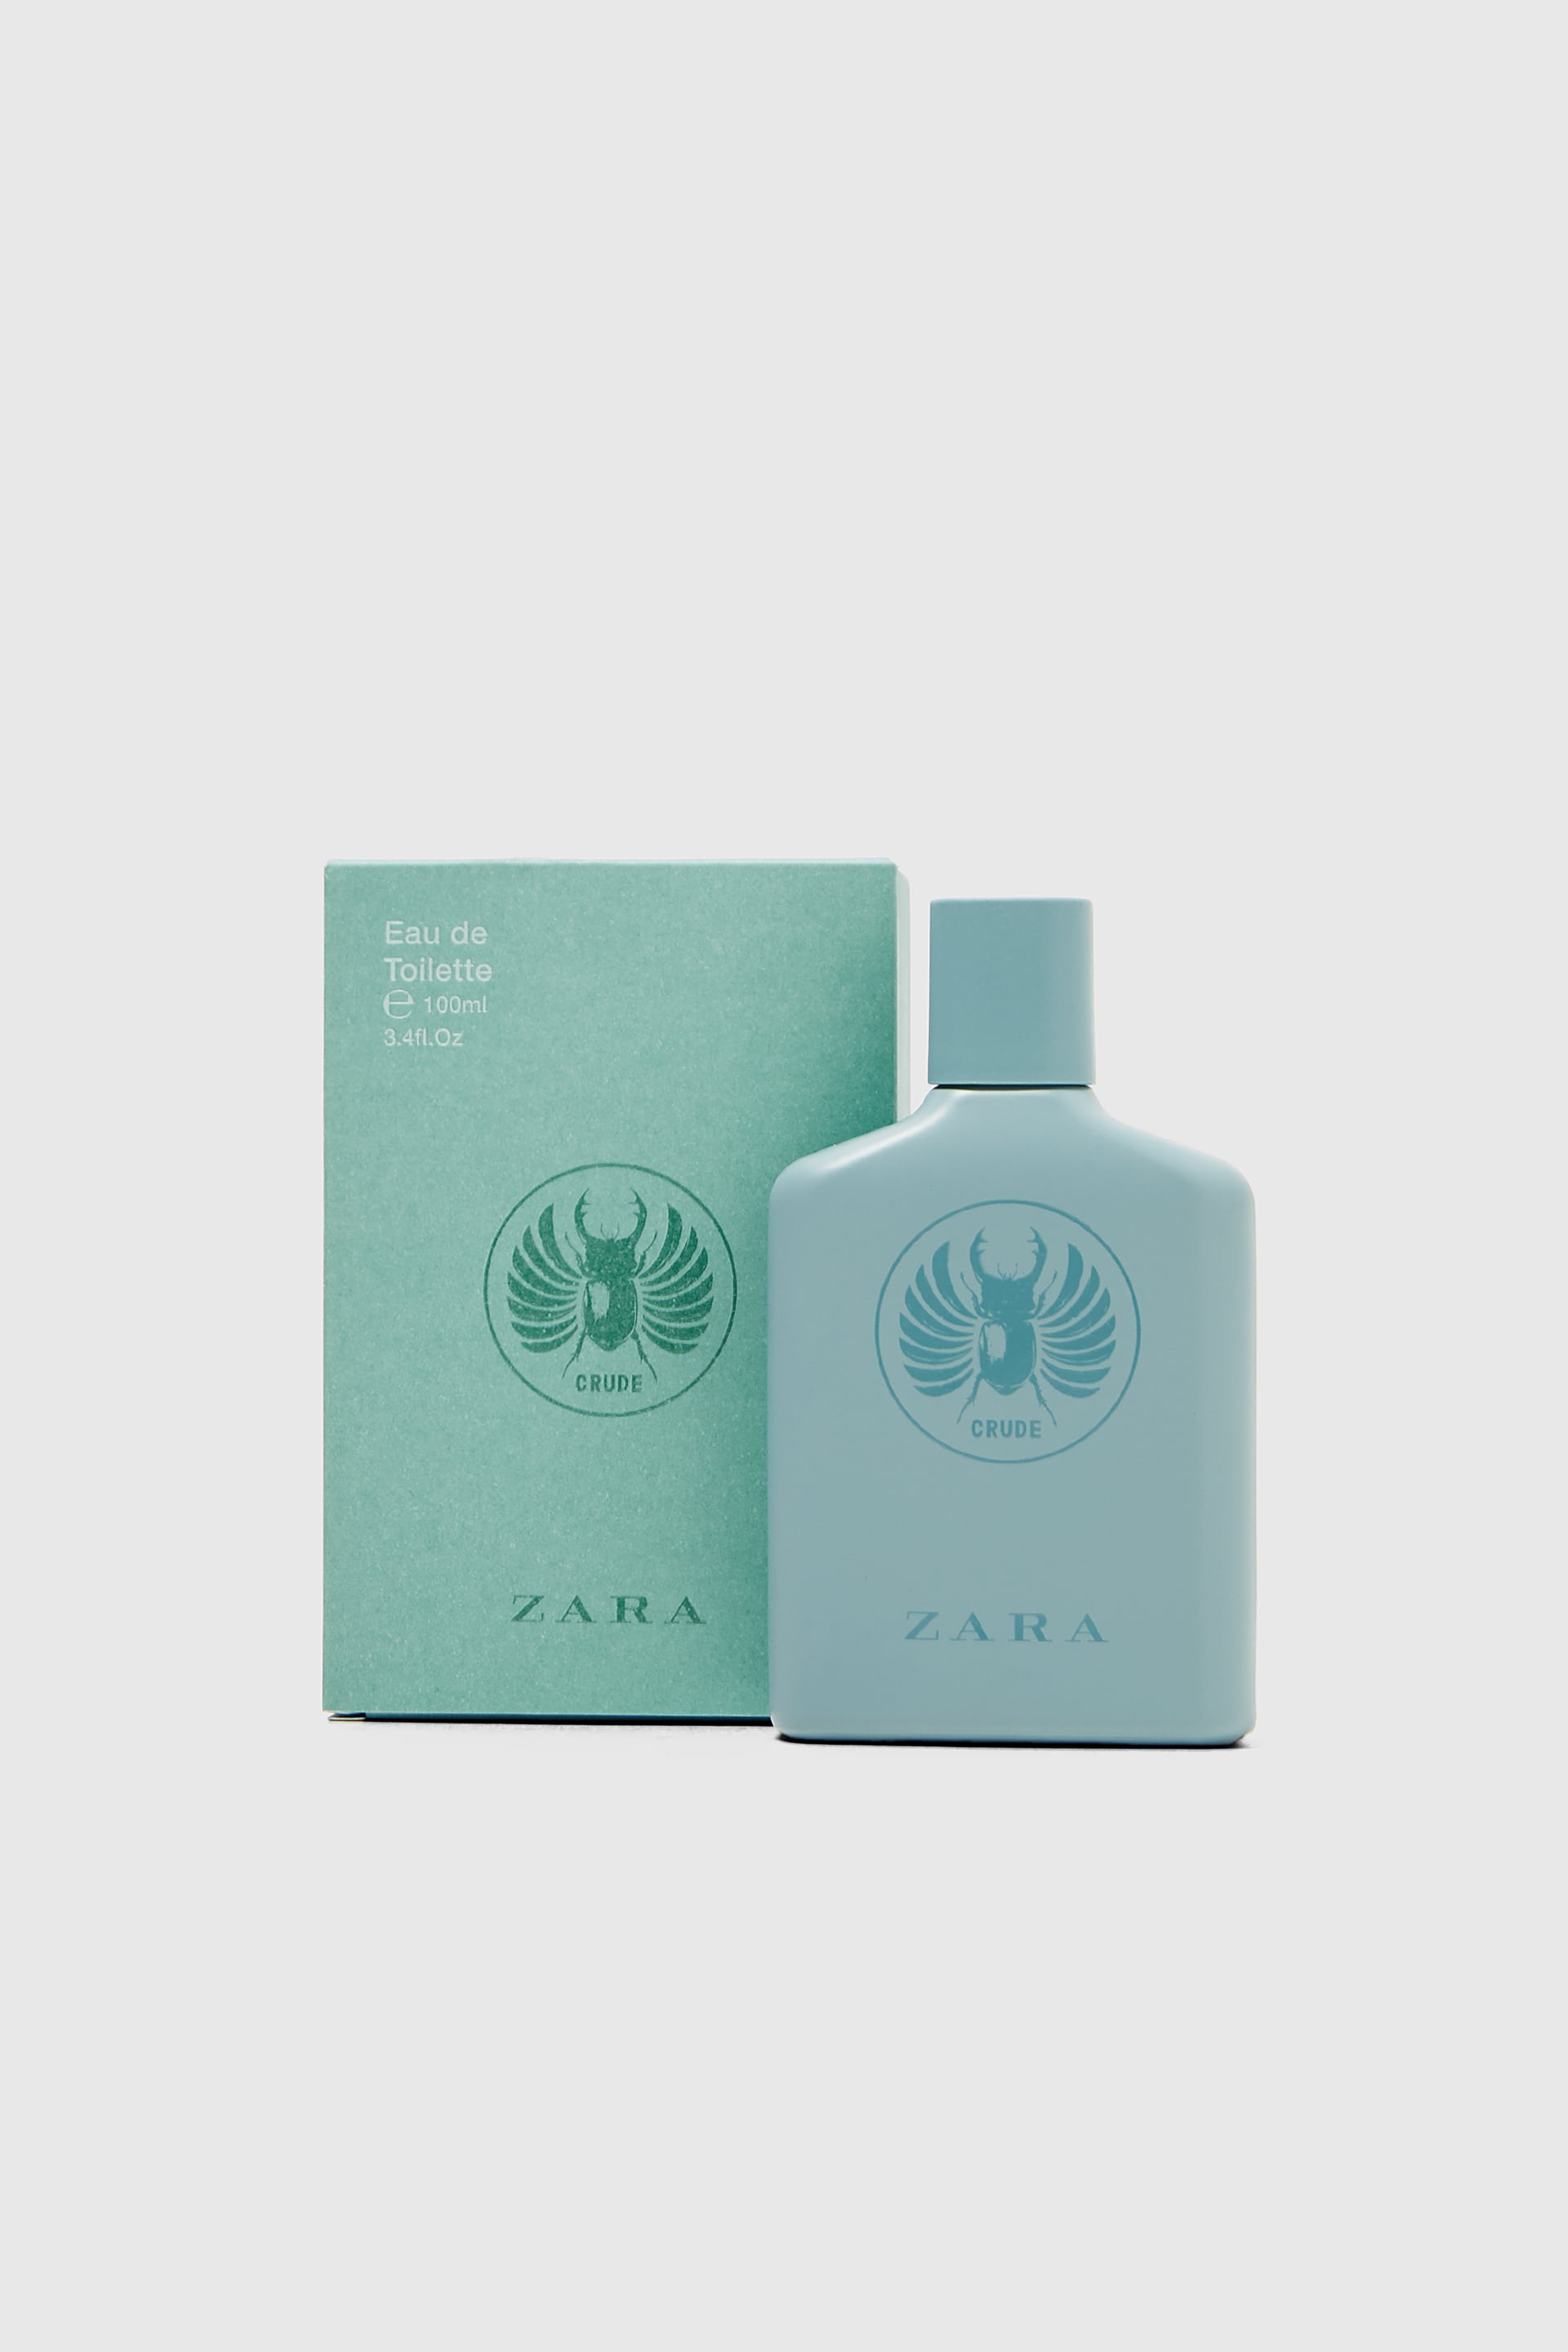 Crude Zara cologne - a new fragrance 